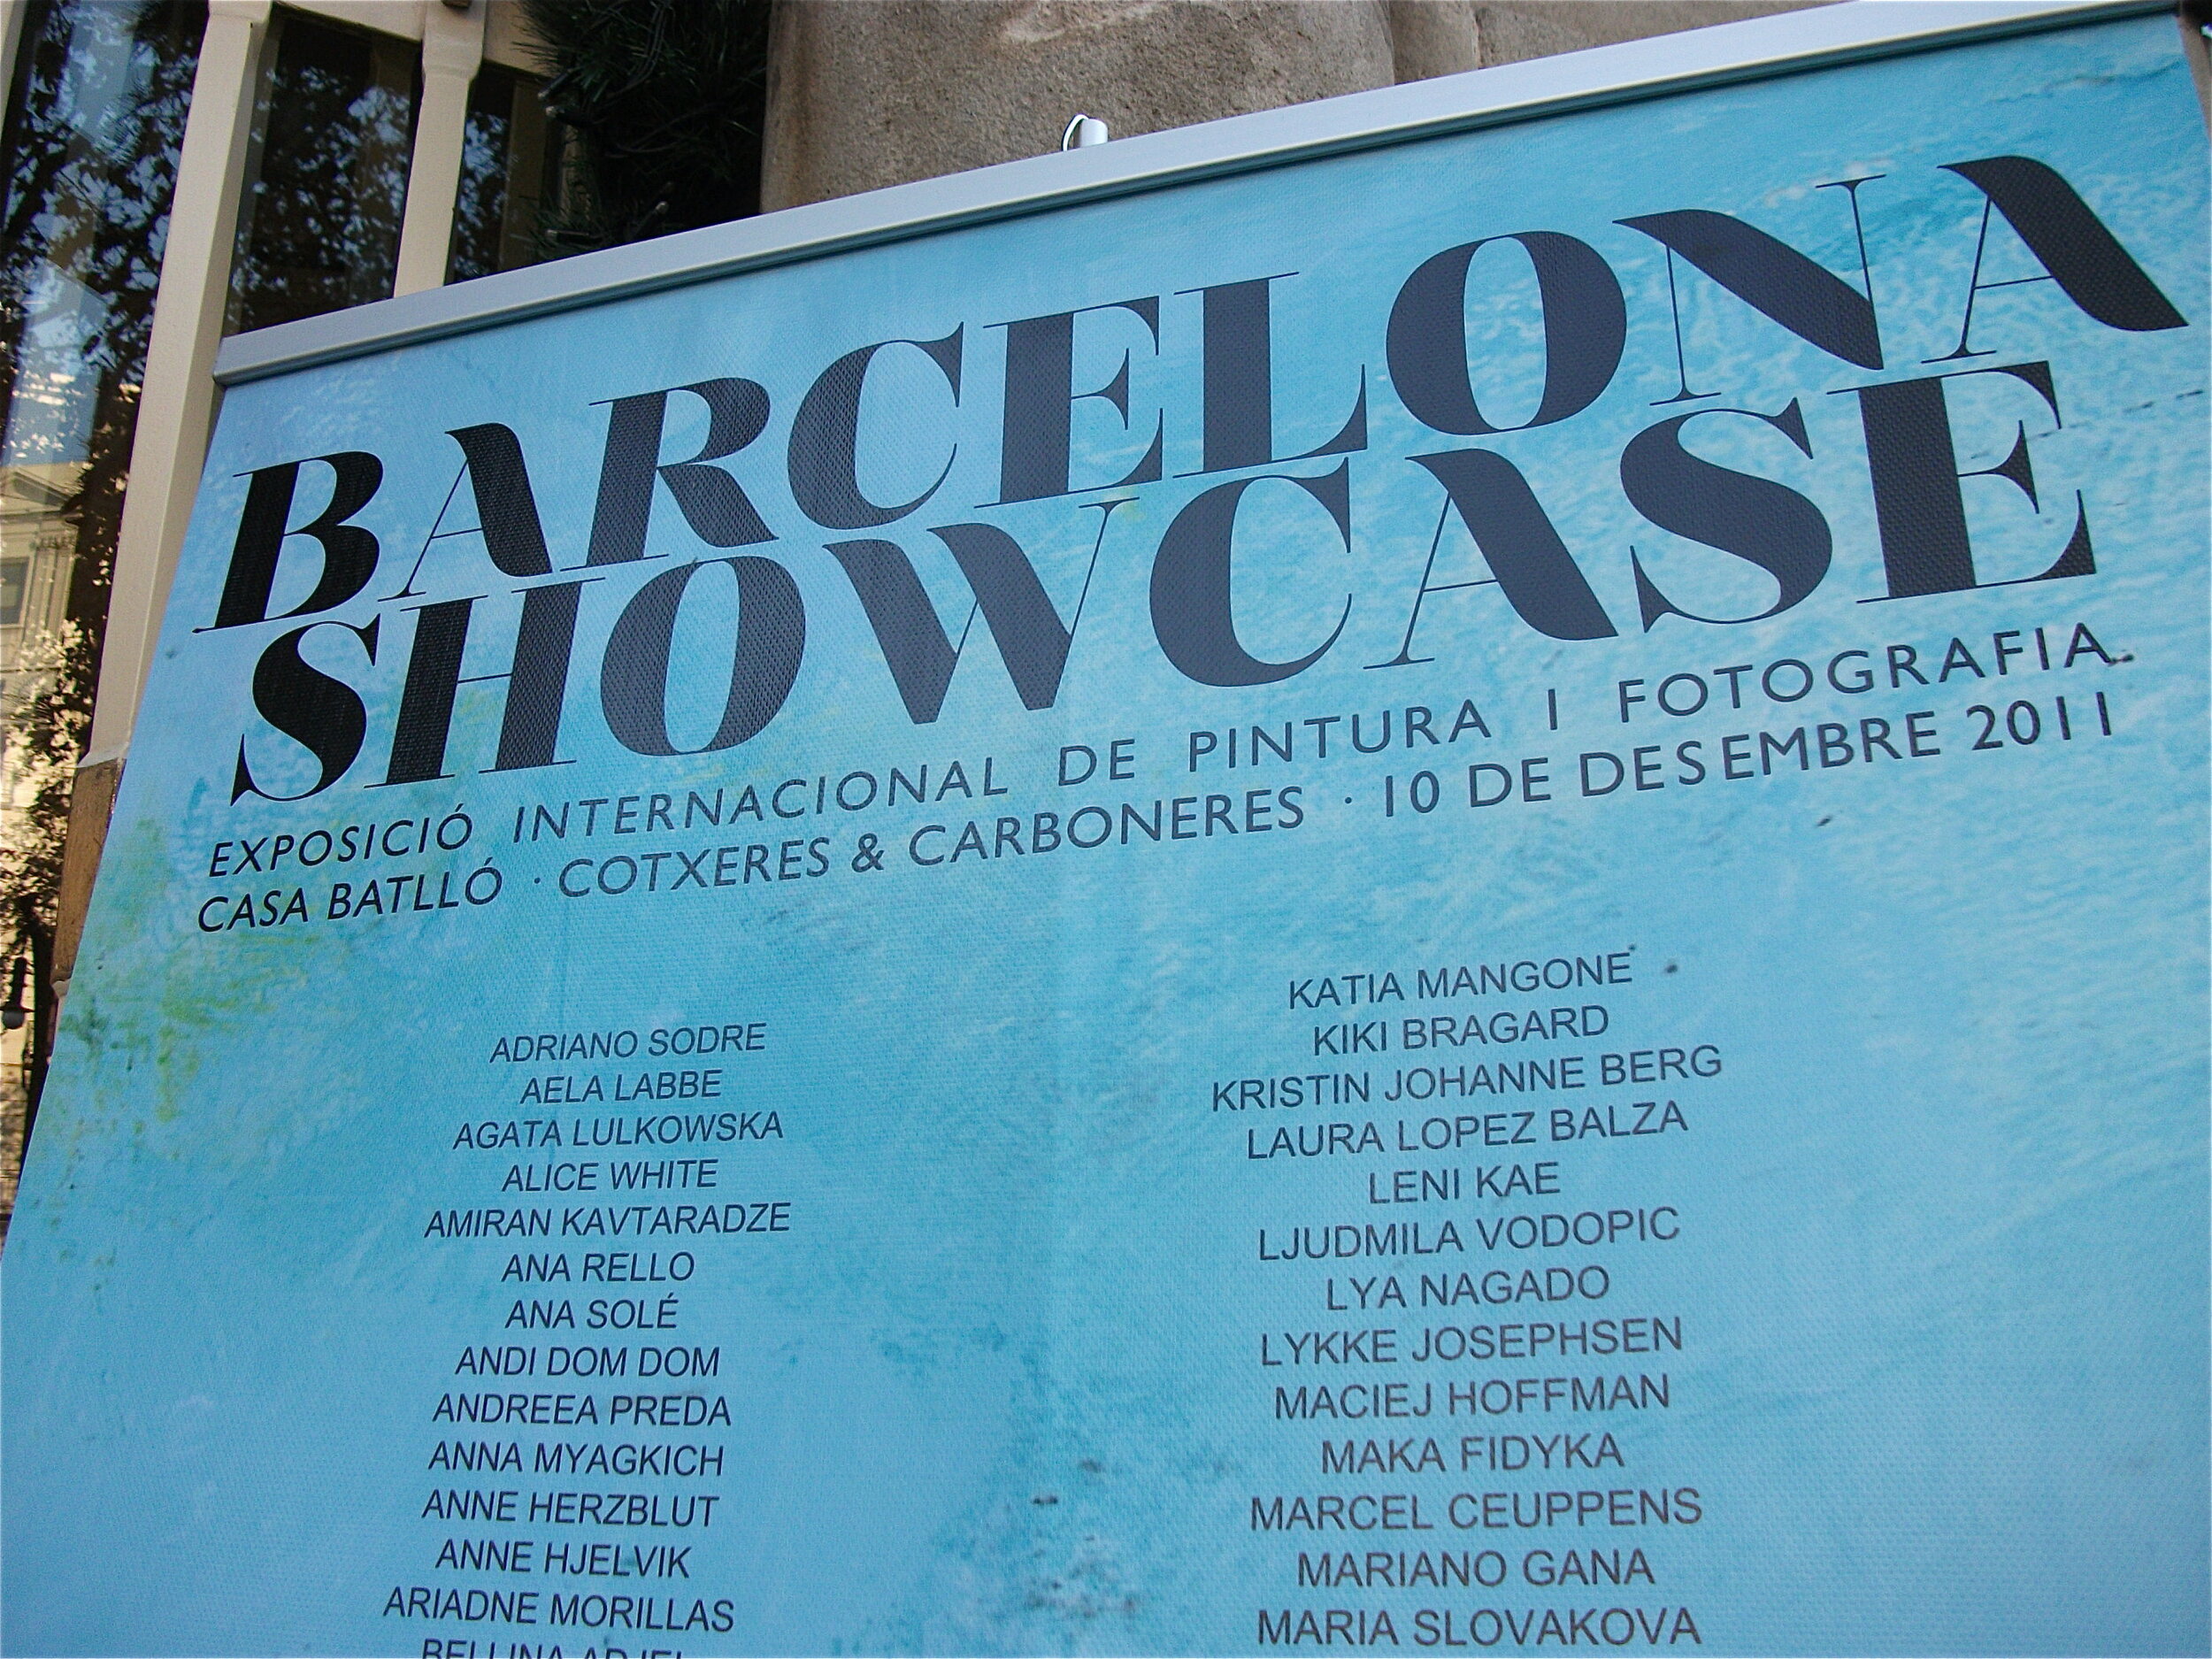 Barcelona Showcase 2011 Exhibitors